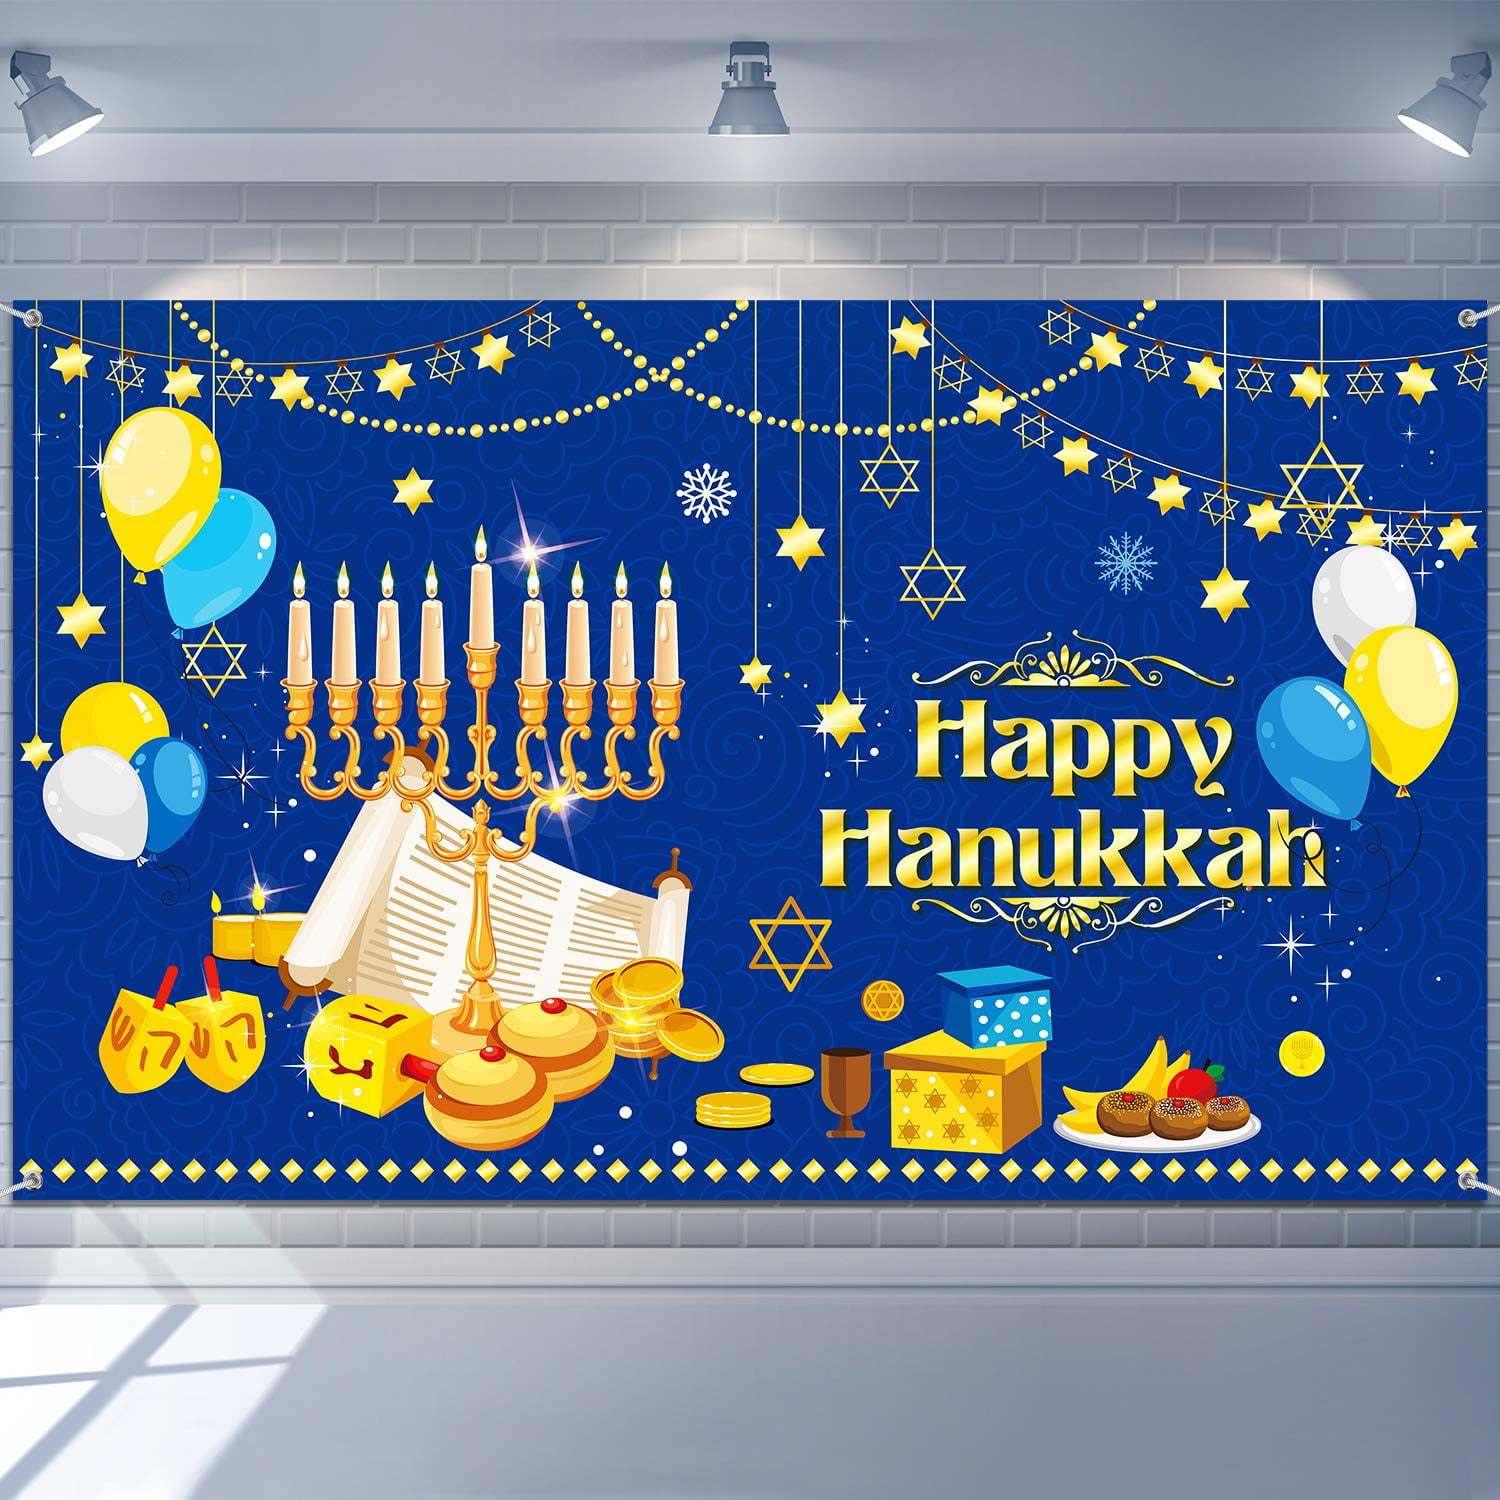 delaimastor Hanukkah Decoration Hanukkah Backdrop Party Supplies Decoration Blue Gold Tabletop Photographic Background Jewish Chanukah Party Decor for Jewish Festival Hanukkah Party Supplies 5x3ft